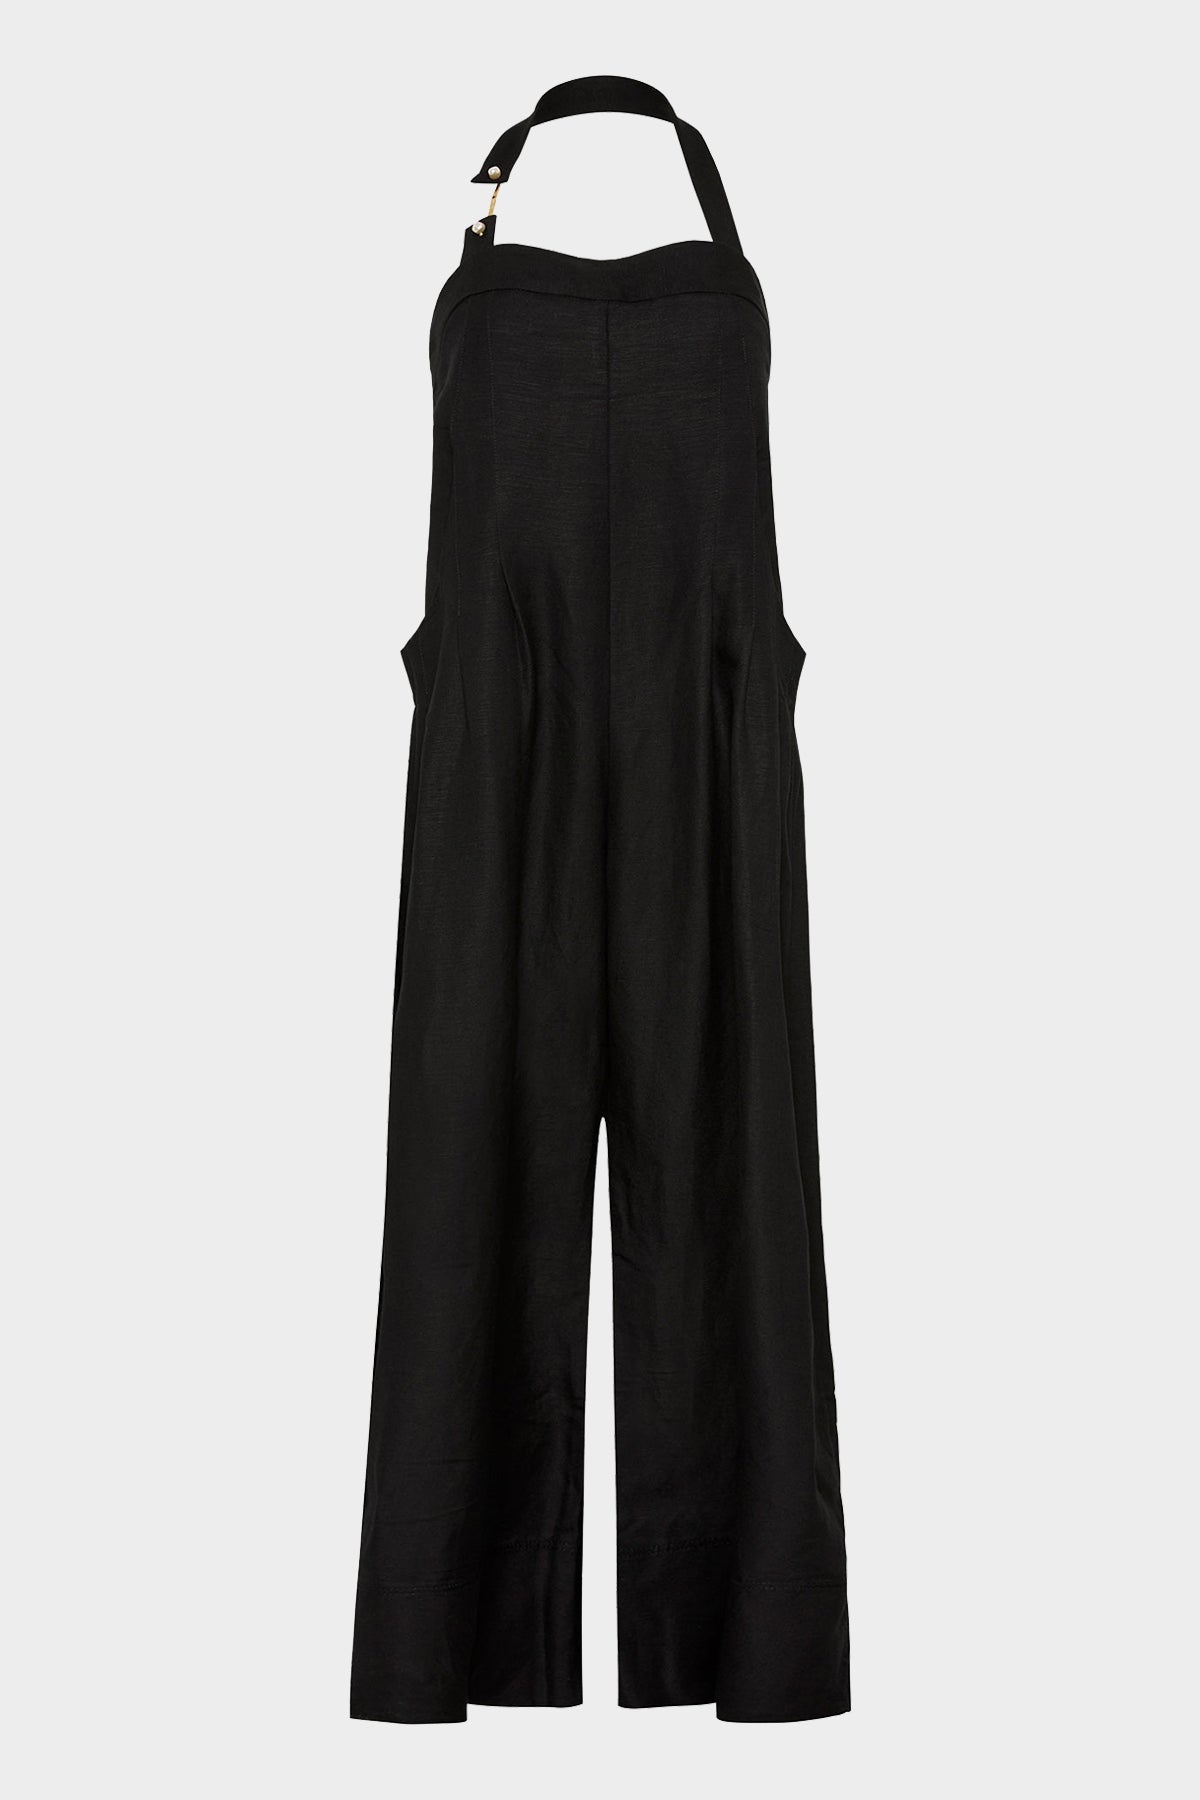 Neo Pleated Halter Jumpsuit in Black - shop-olivia.com